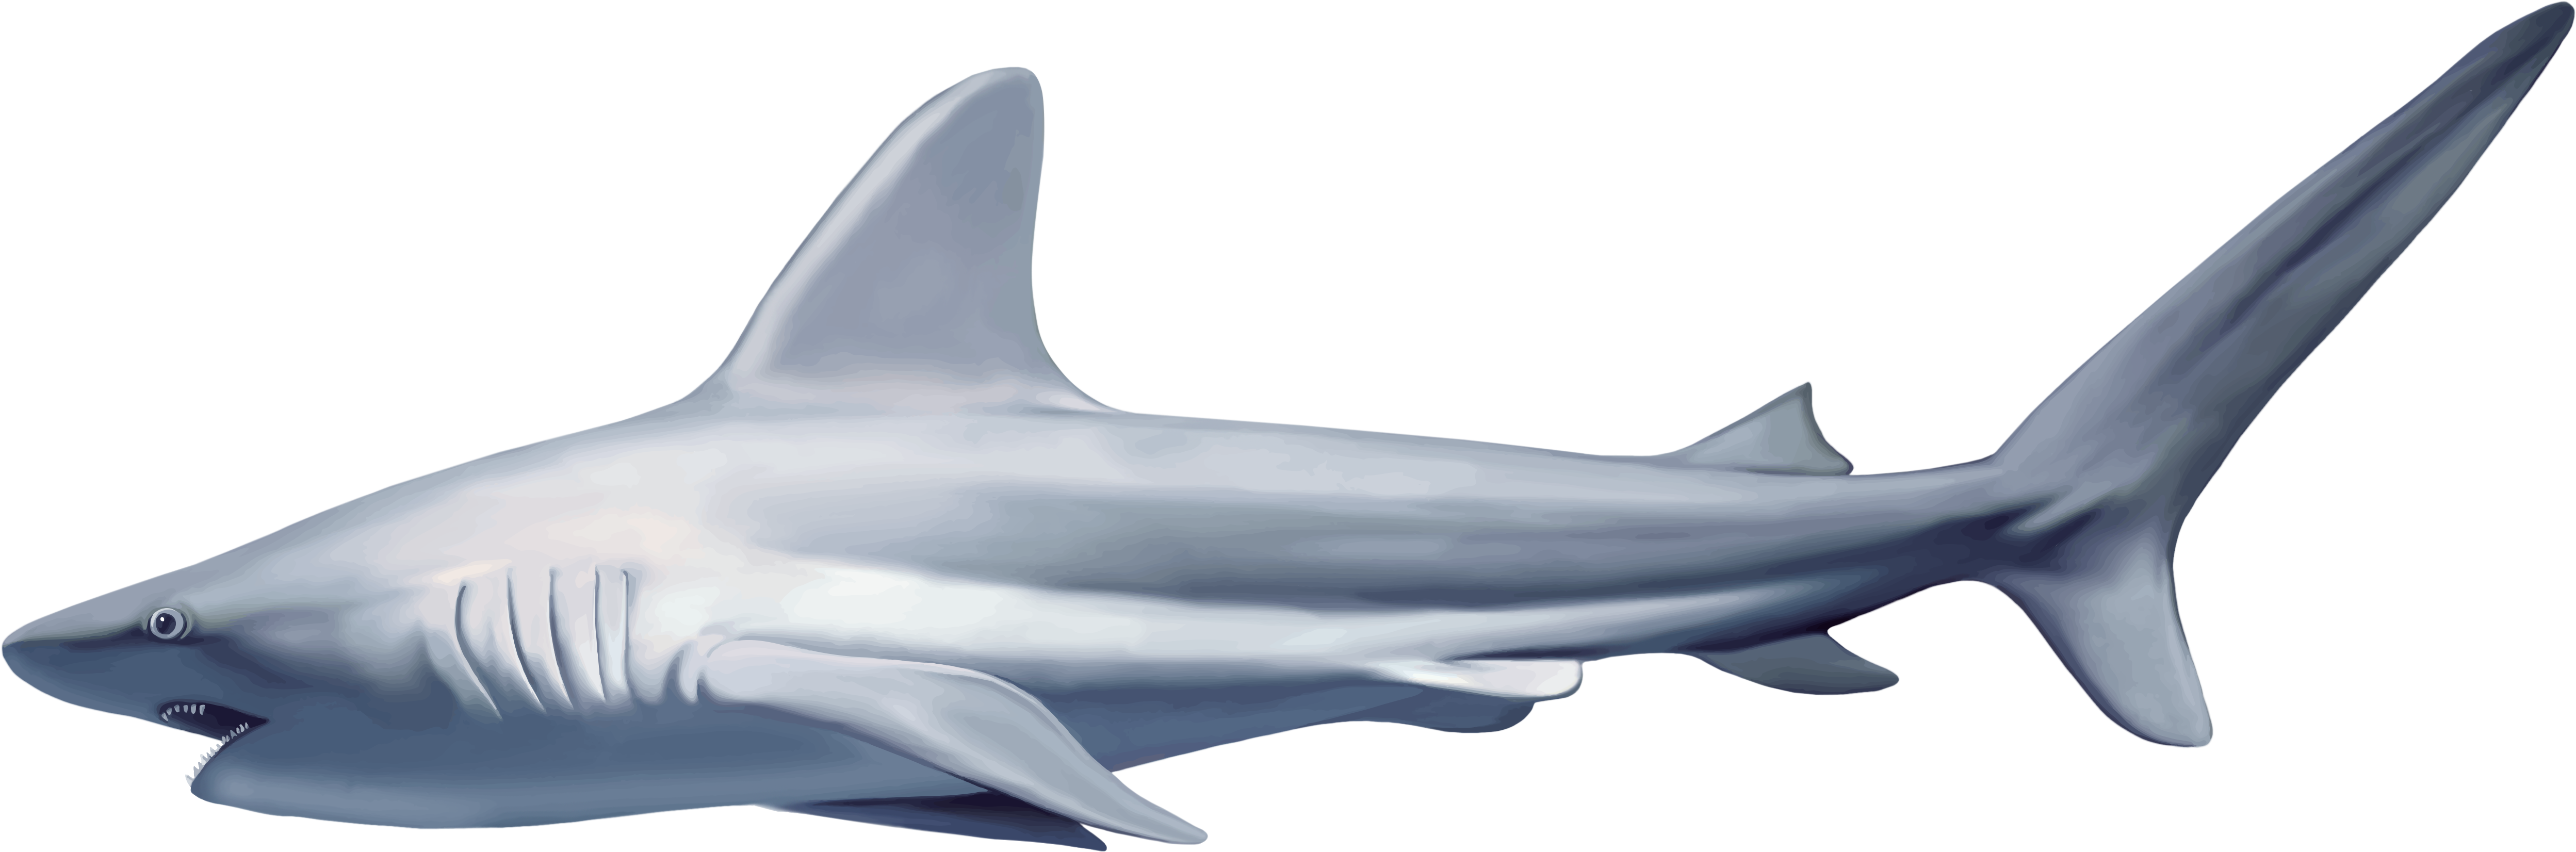 Reef Shark White Background (5259x1742)